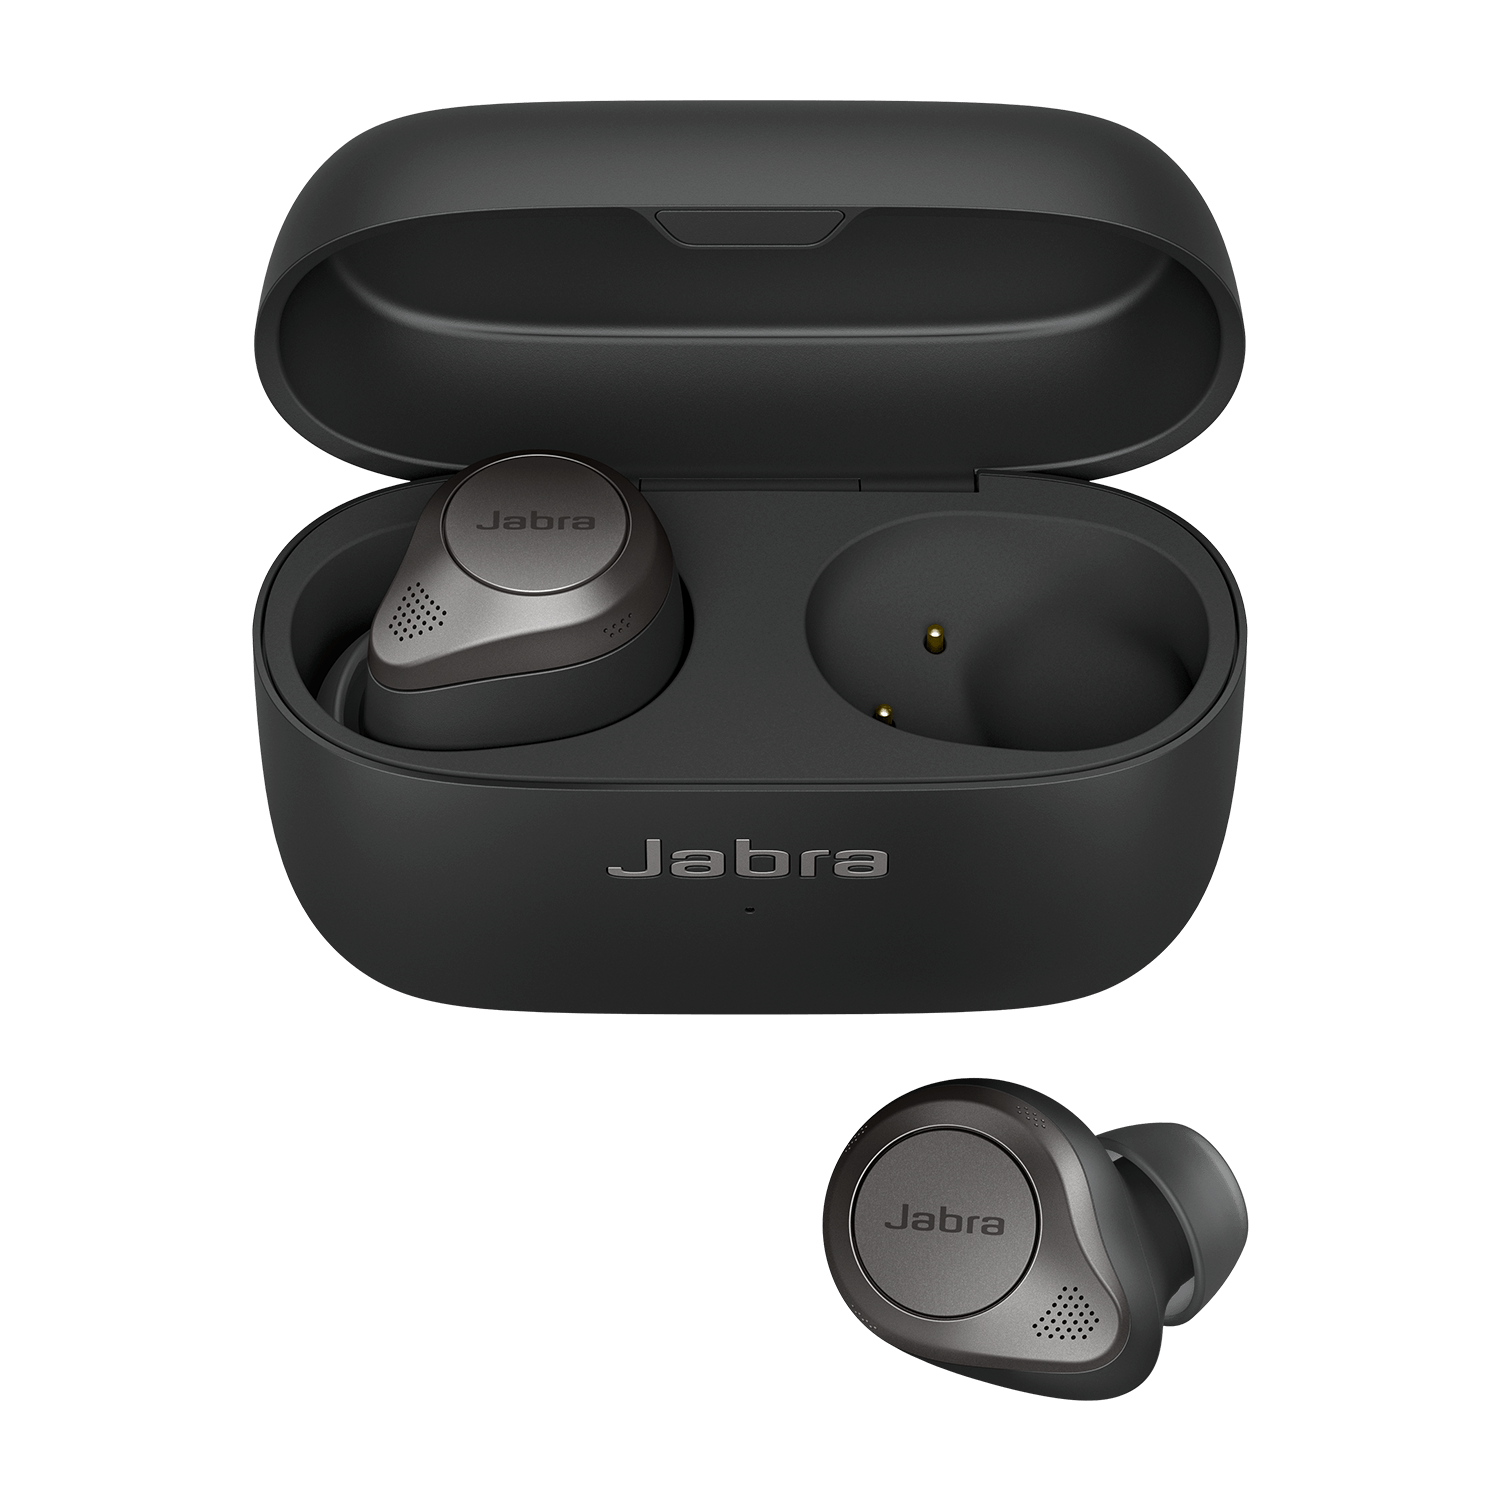 jabra bluetooth headset ps4